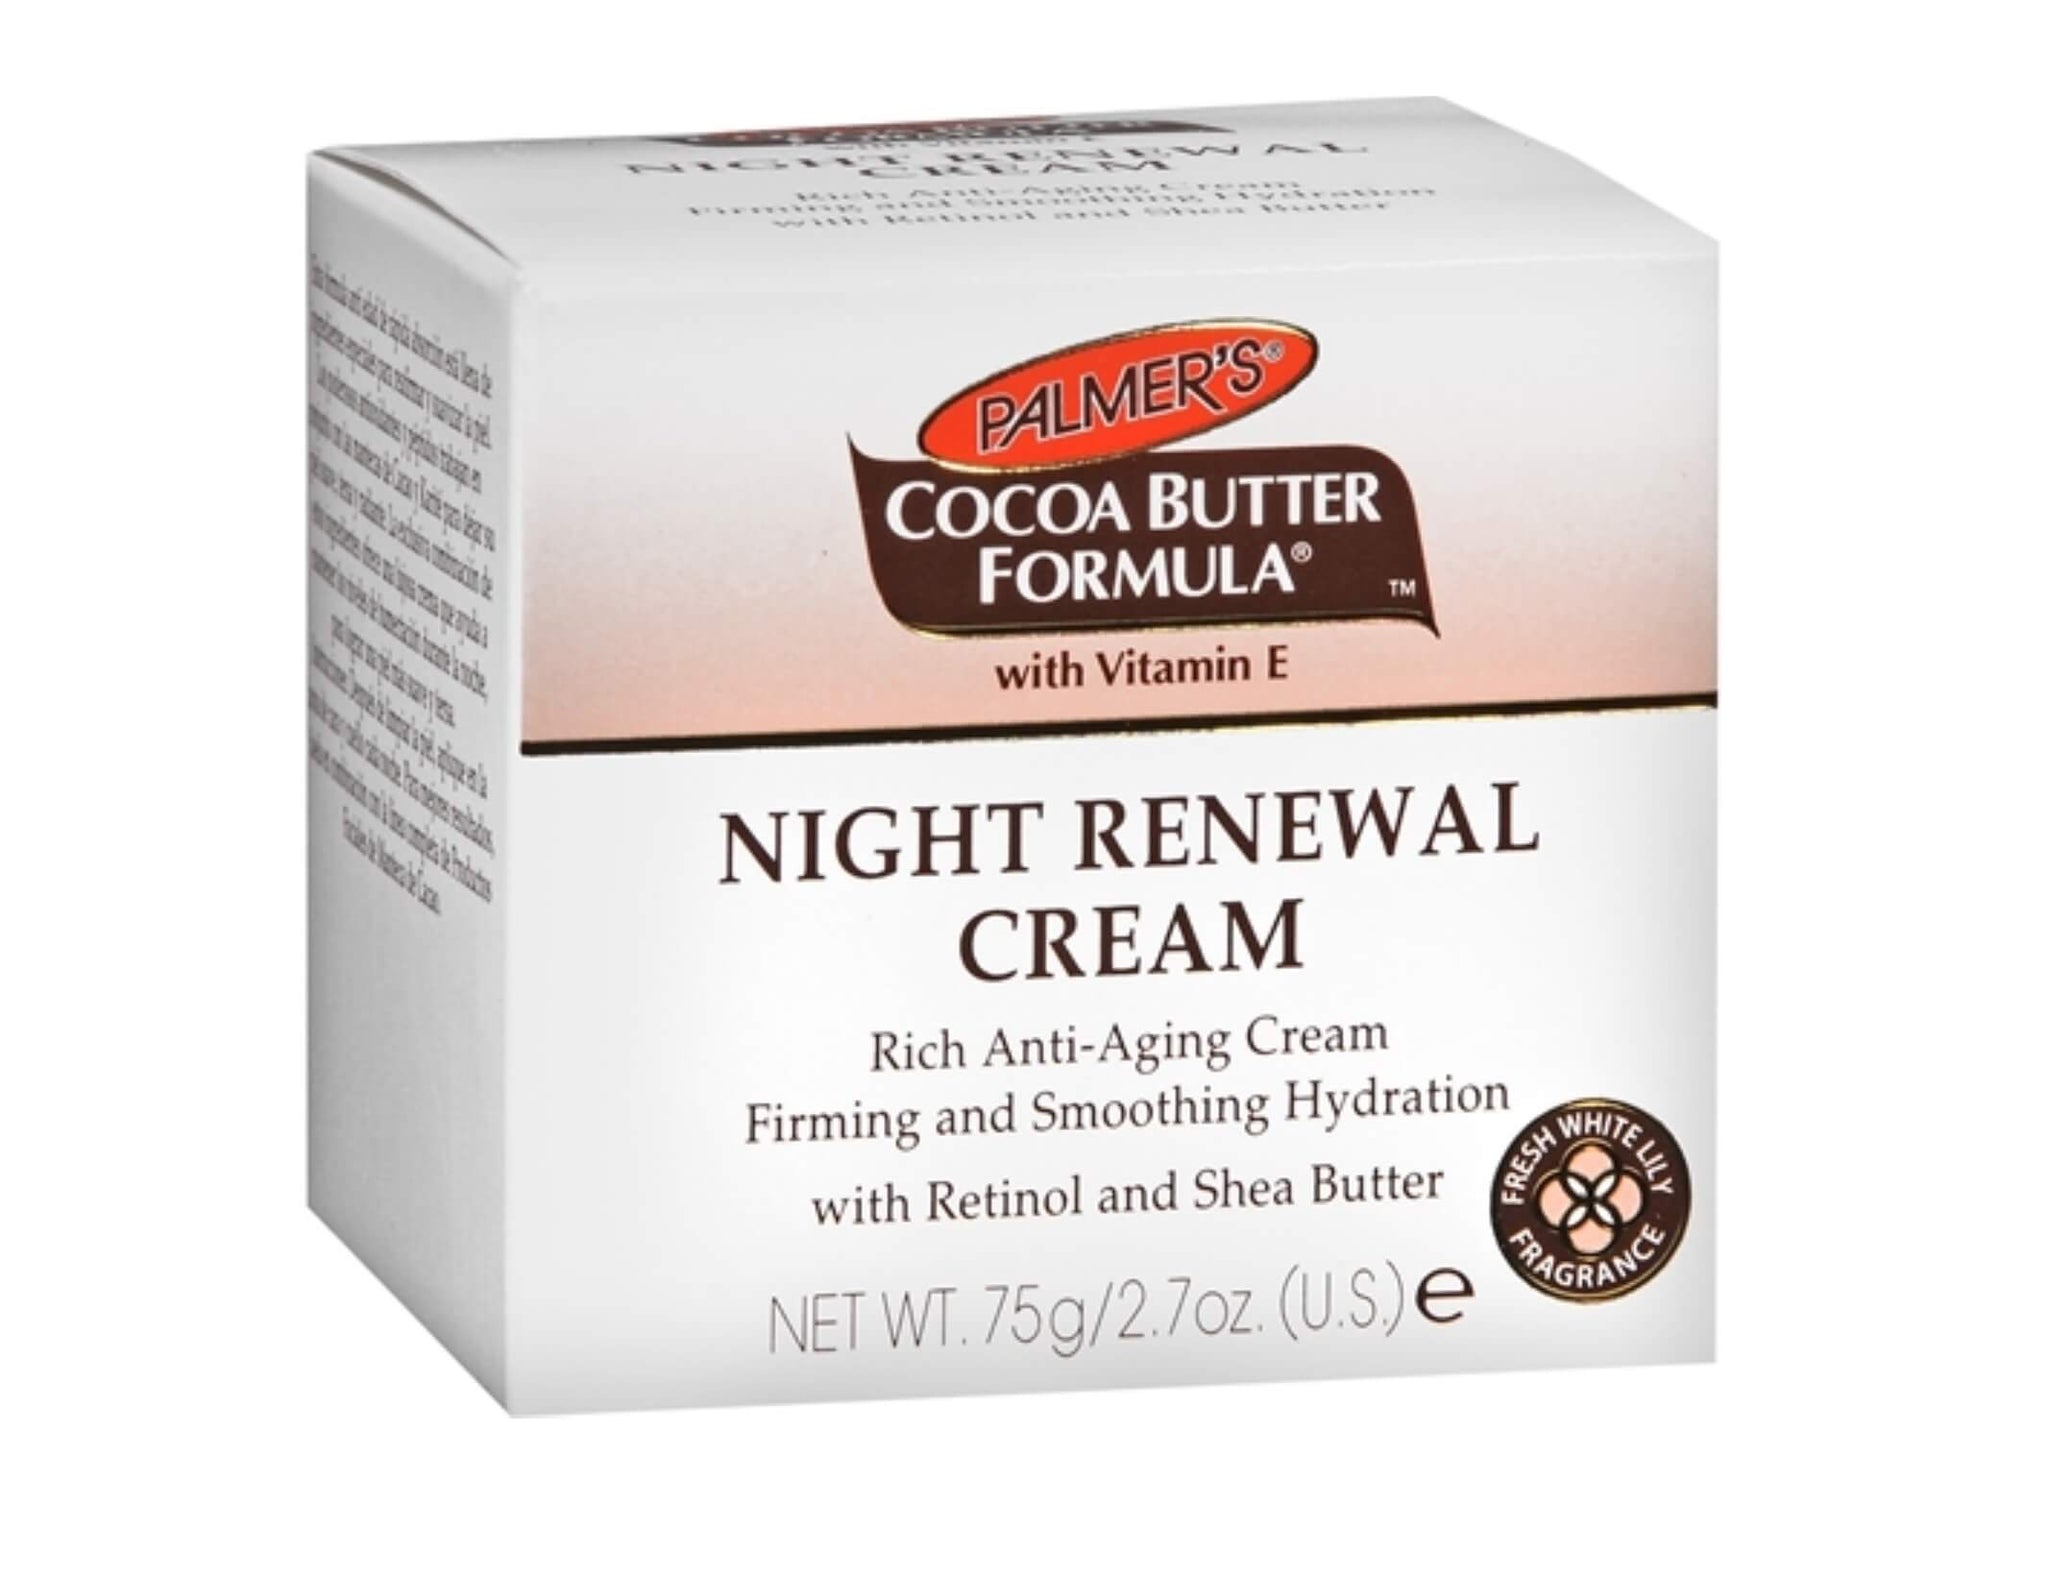 Palmers Cocoa Butter Formula Night Renewal Cream 75g